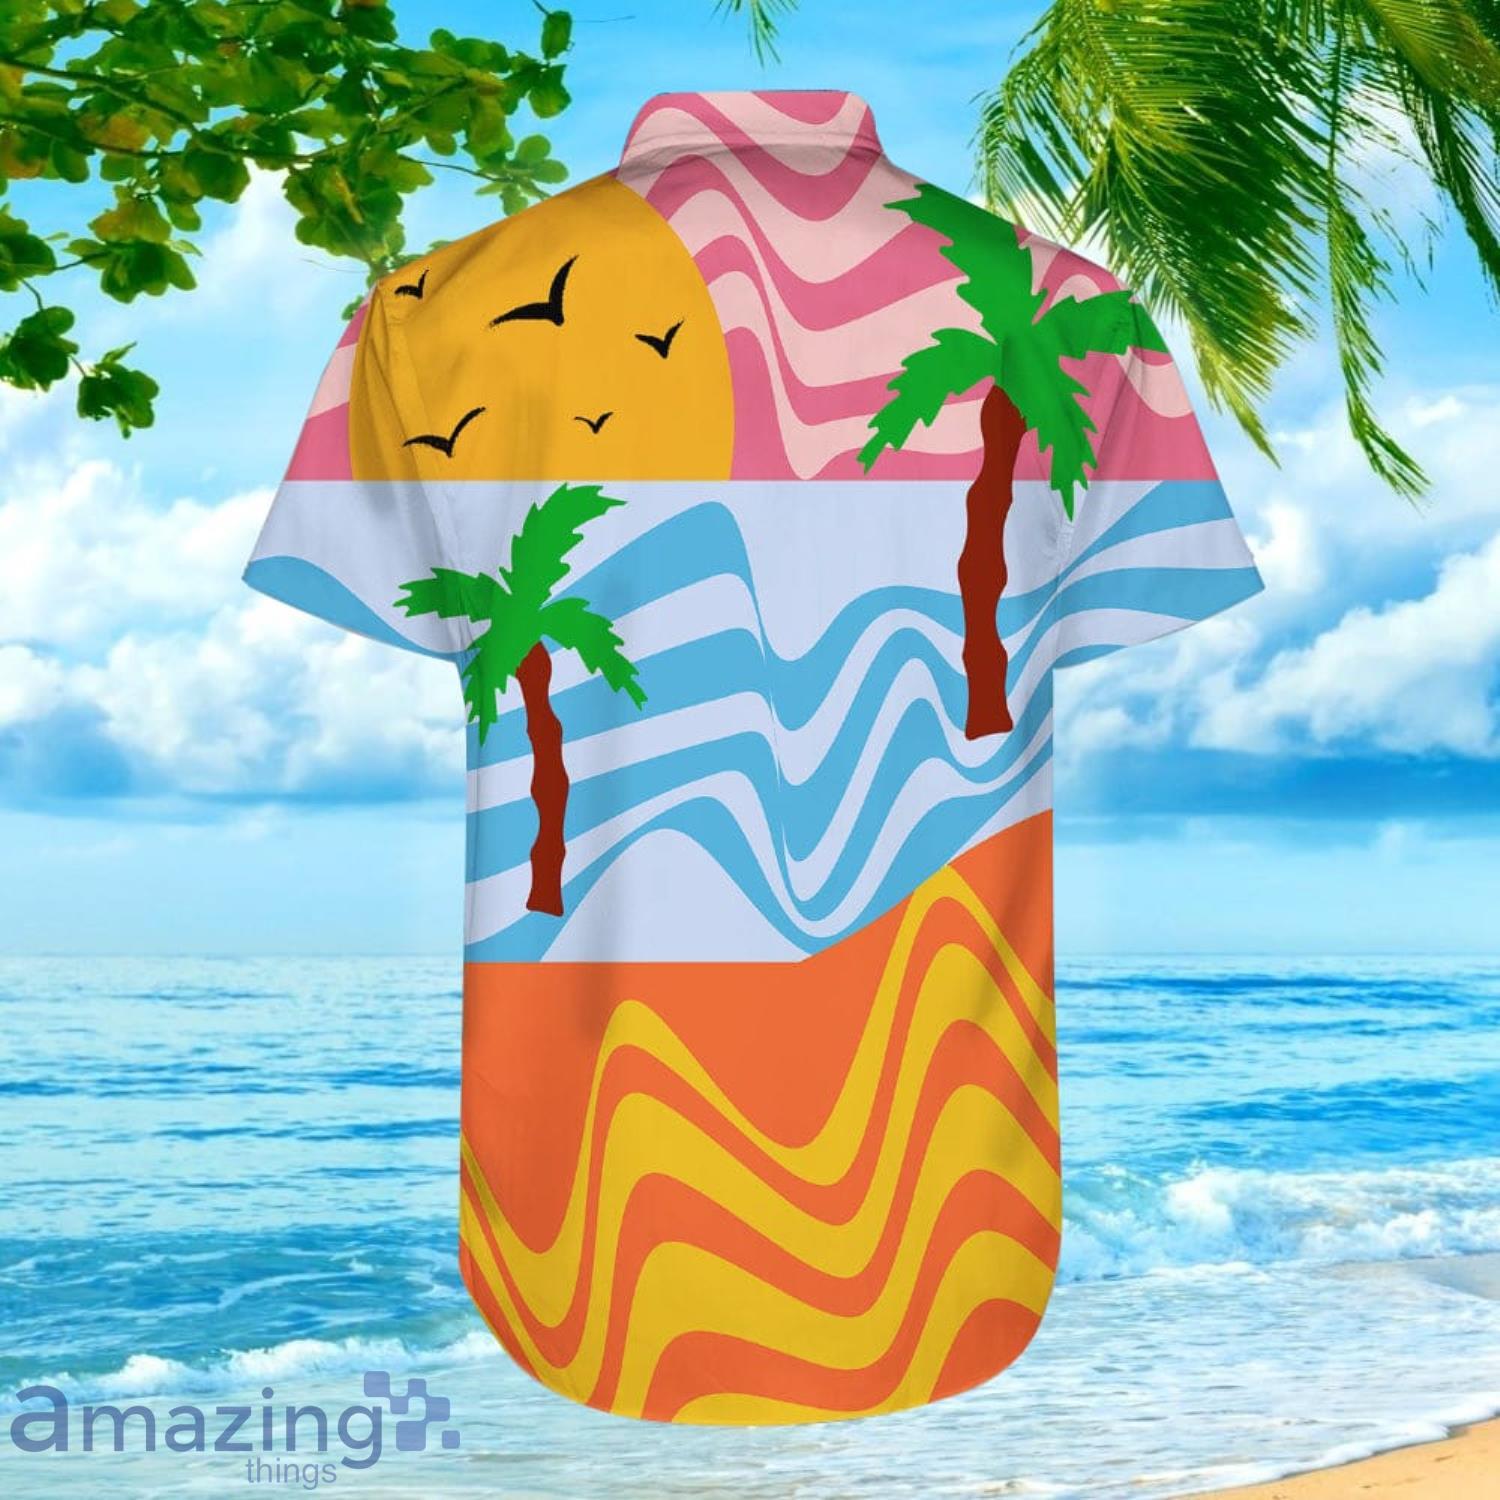 Houston Astros Snoopy Hawaiian Shirt And Shorts Best Gift For Summer  Vacation - Banantees